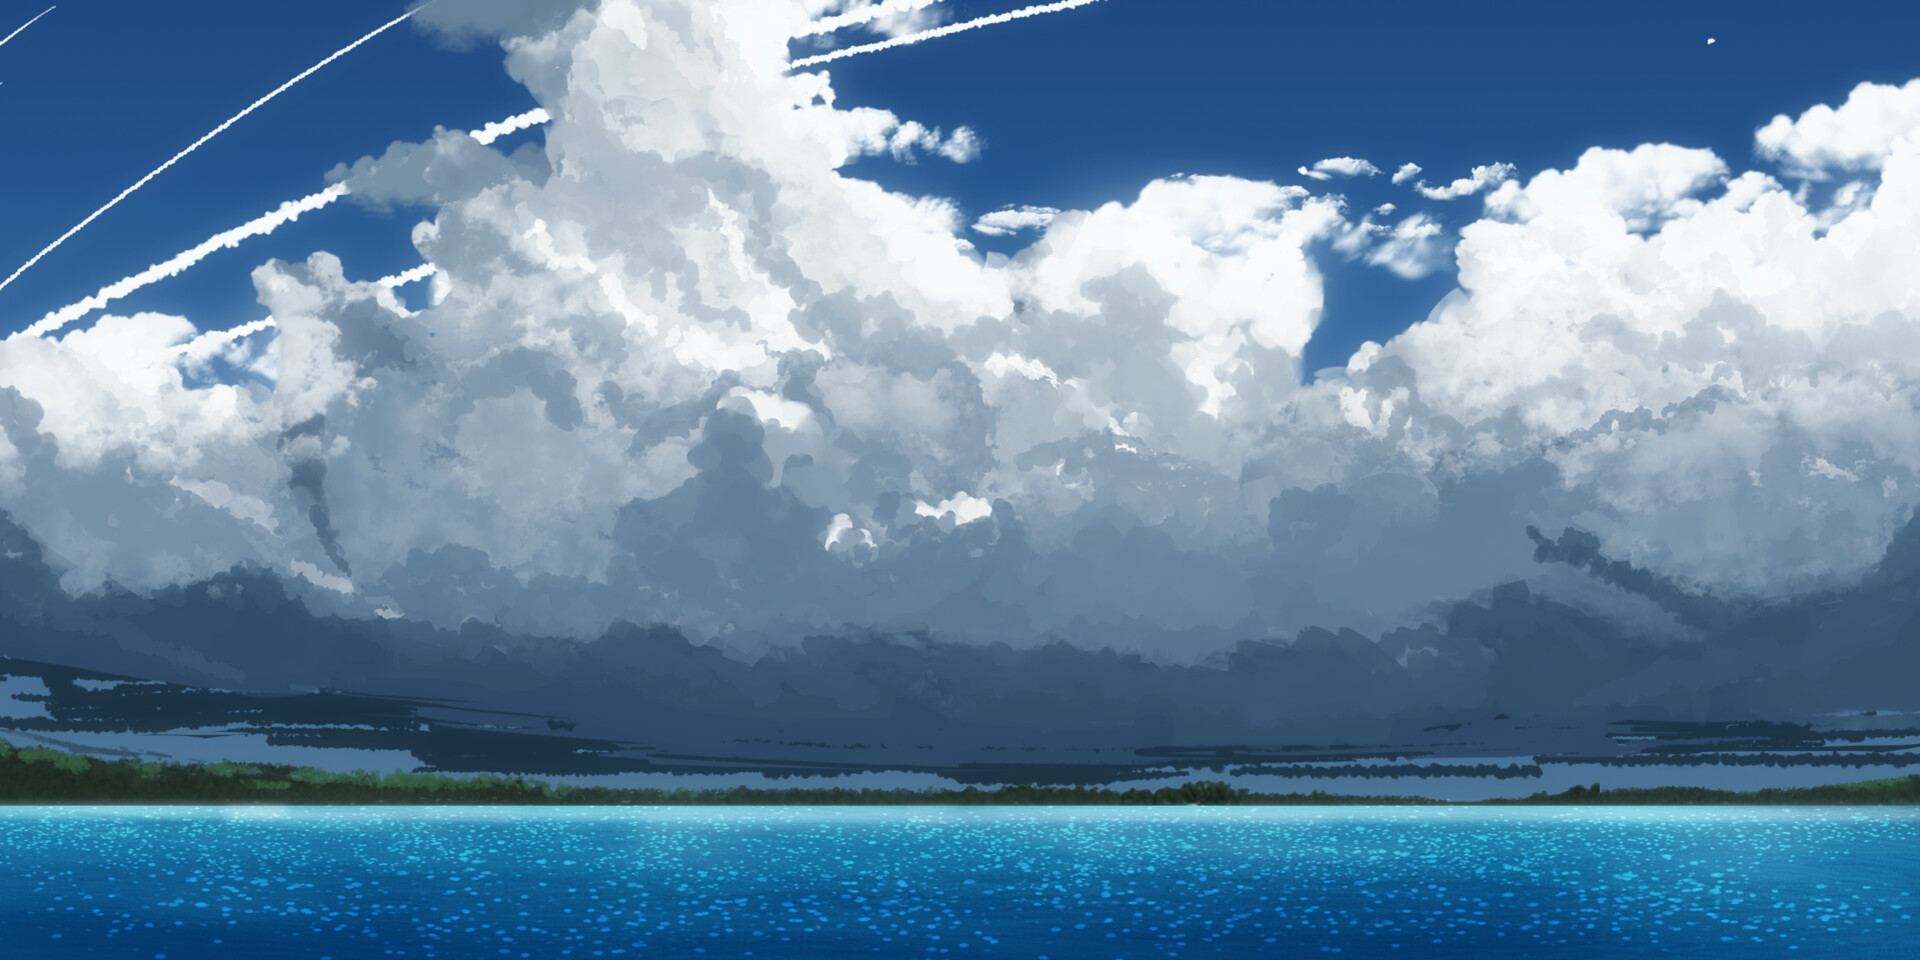 ArtStation - Anime Styled Landscape | Ocean View #1